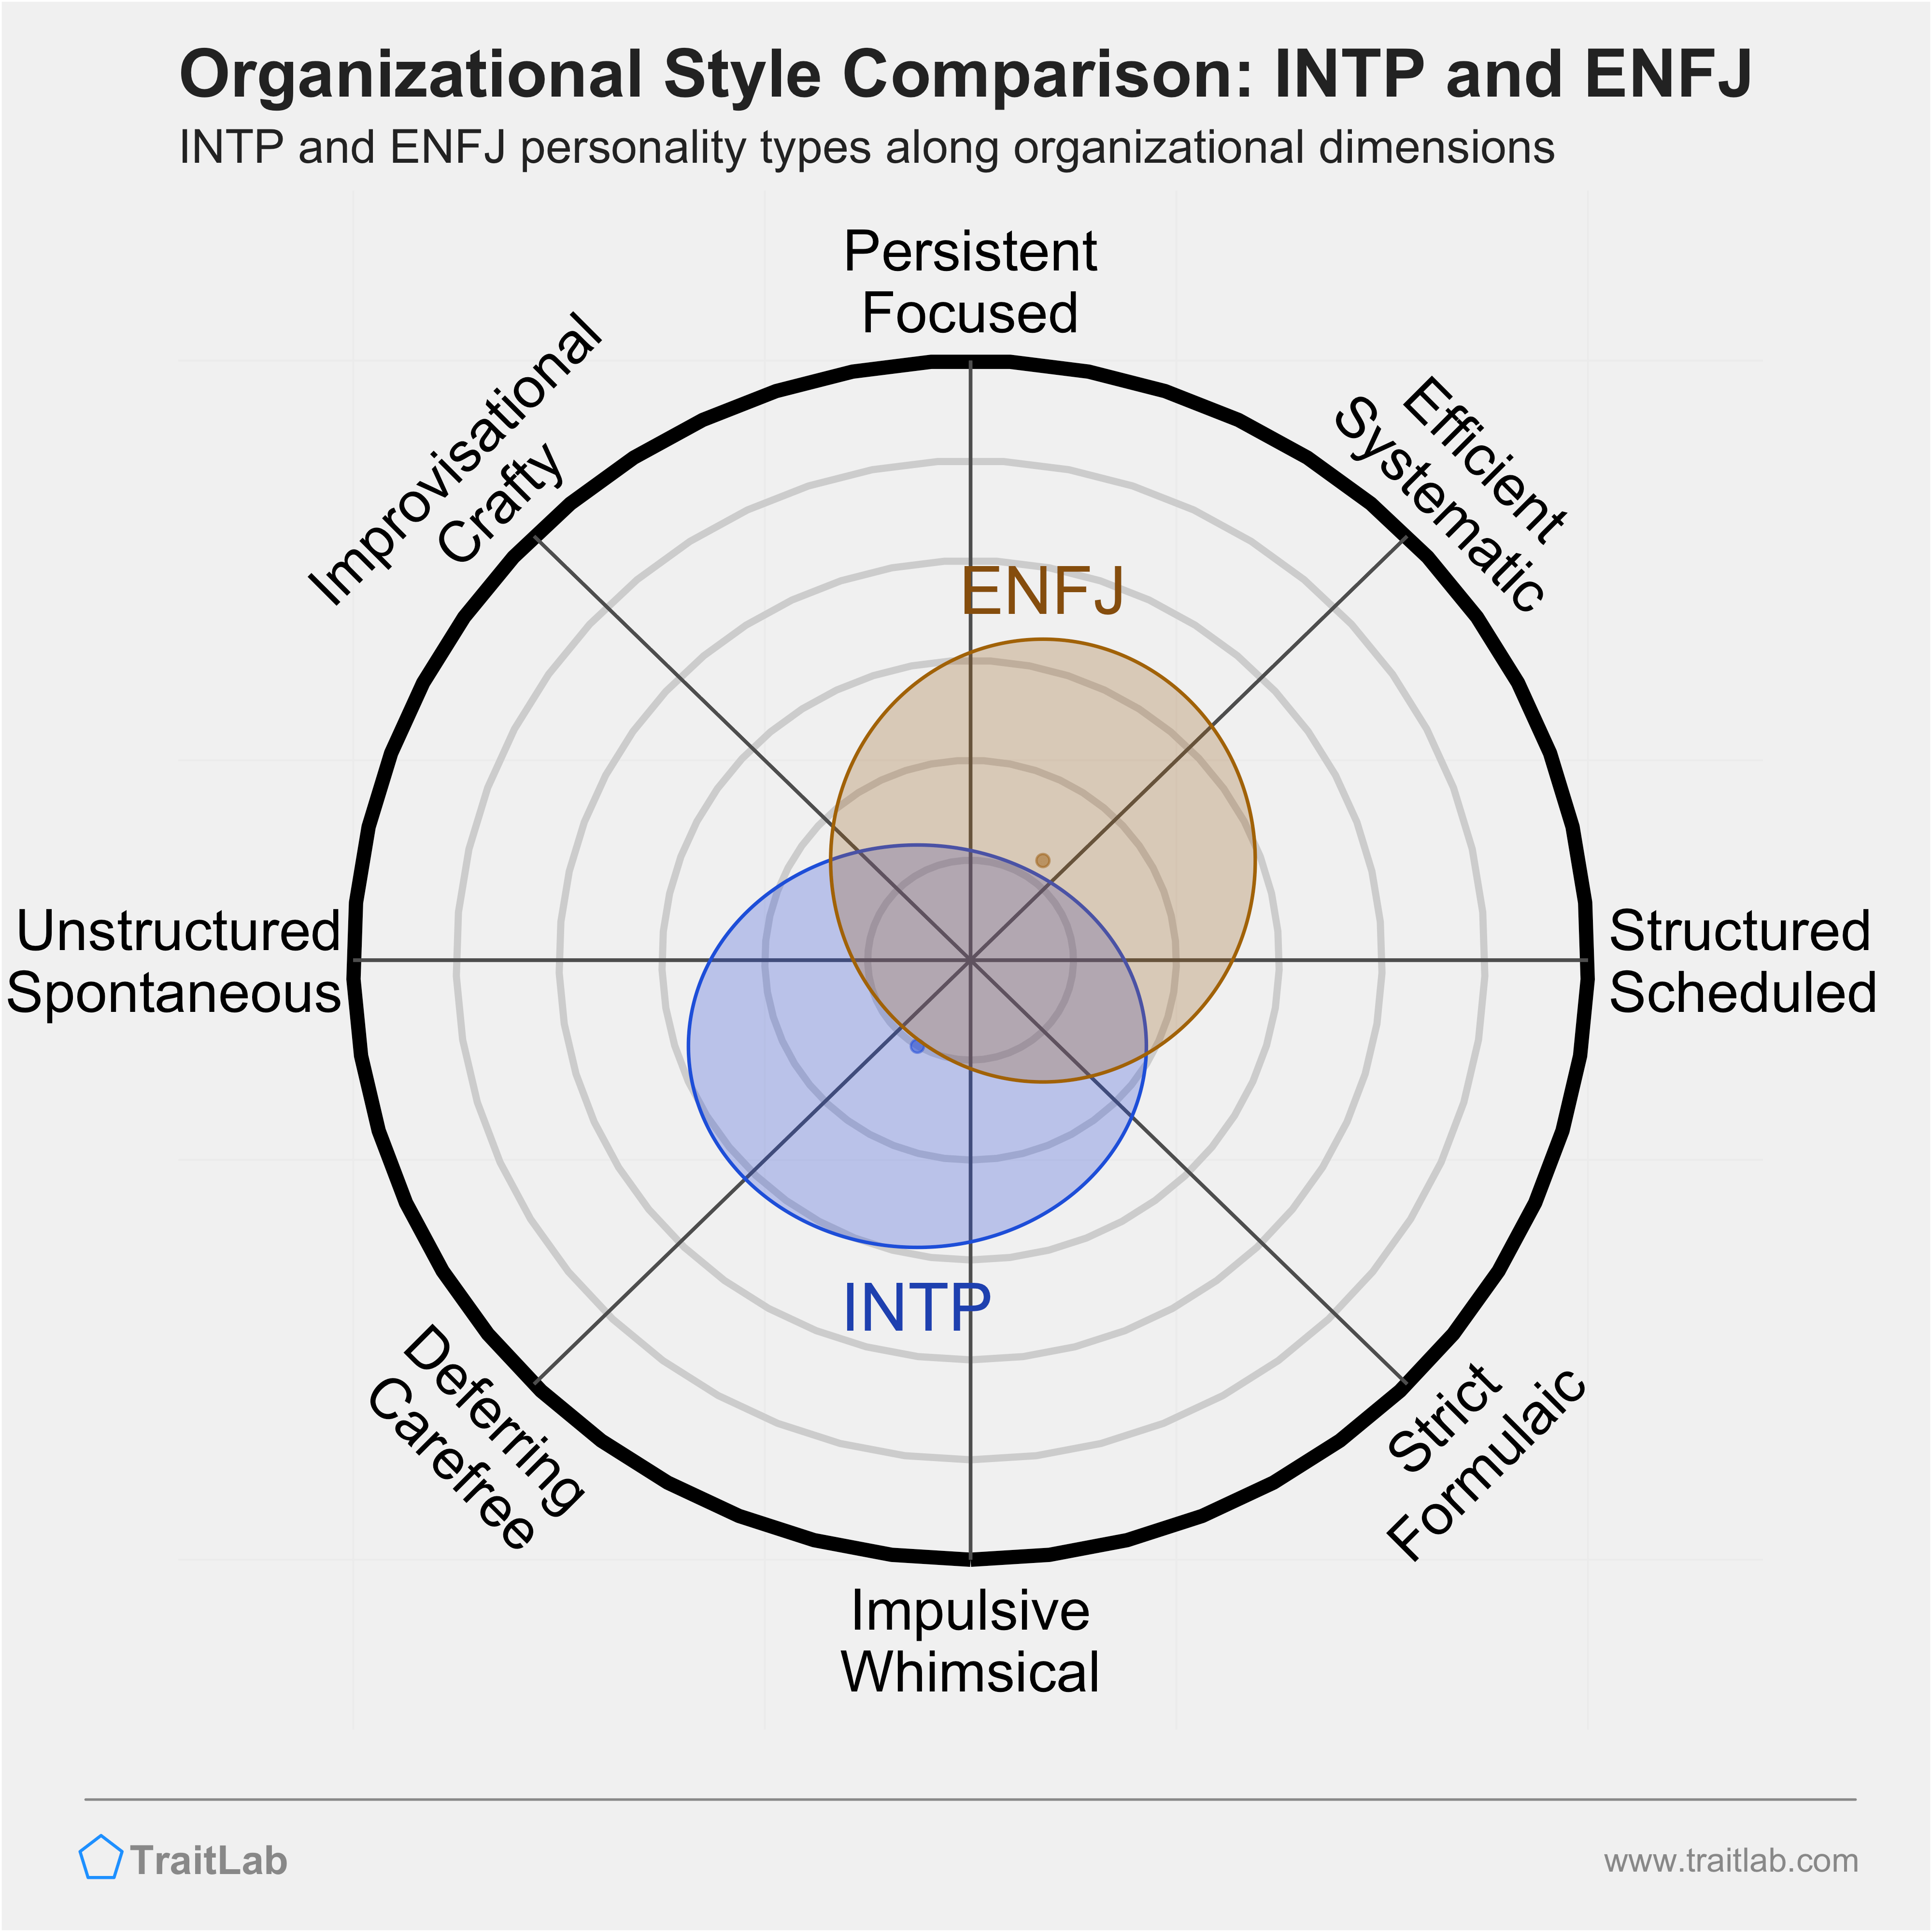 INTP and ENFJ comparison across organizational dimensions